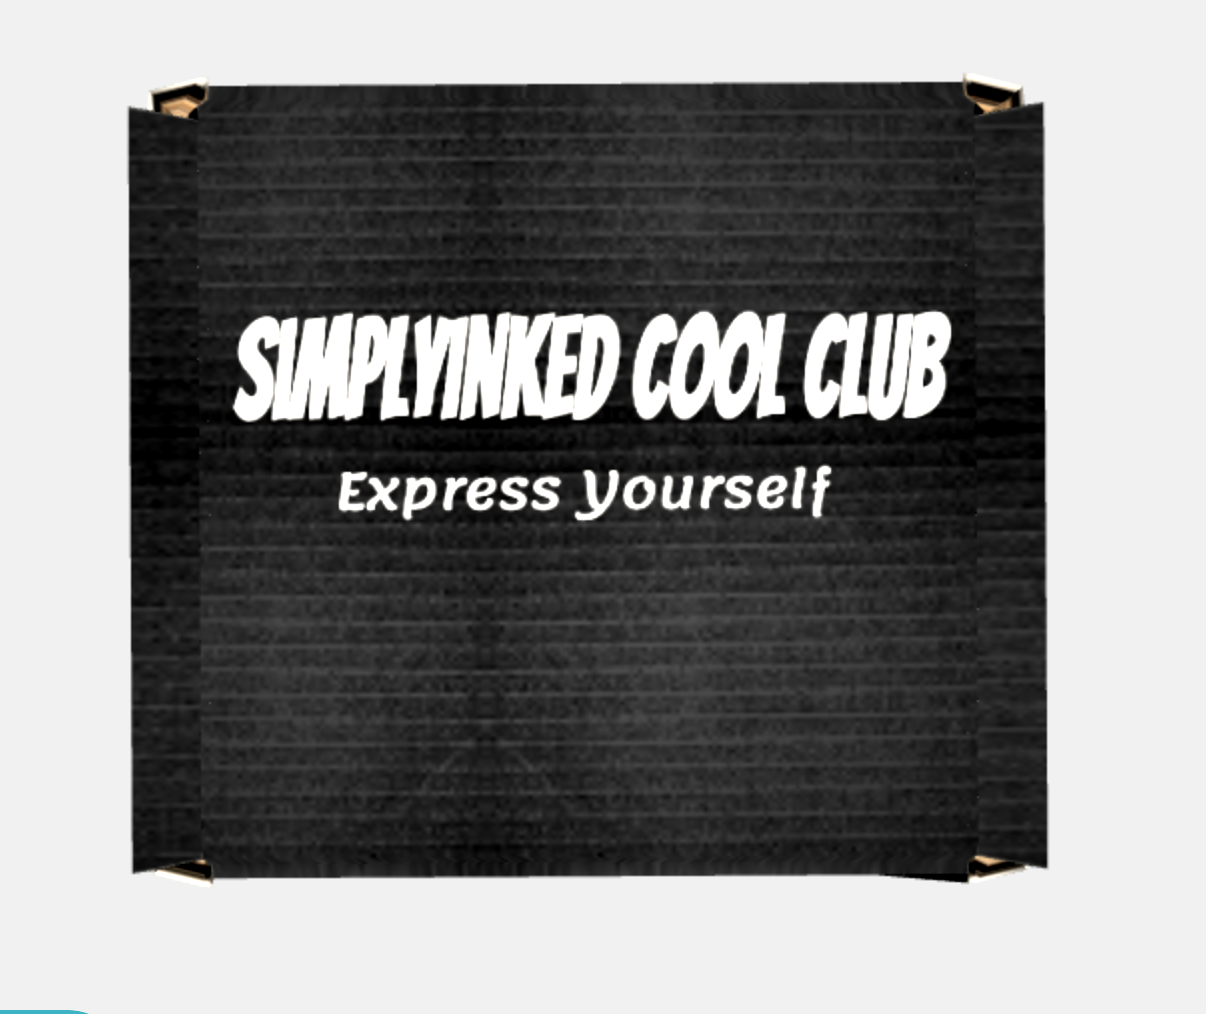 SimplyInked Cool Club